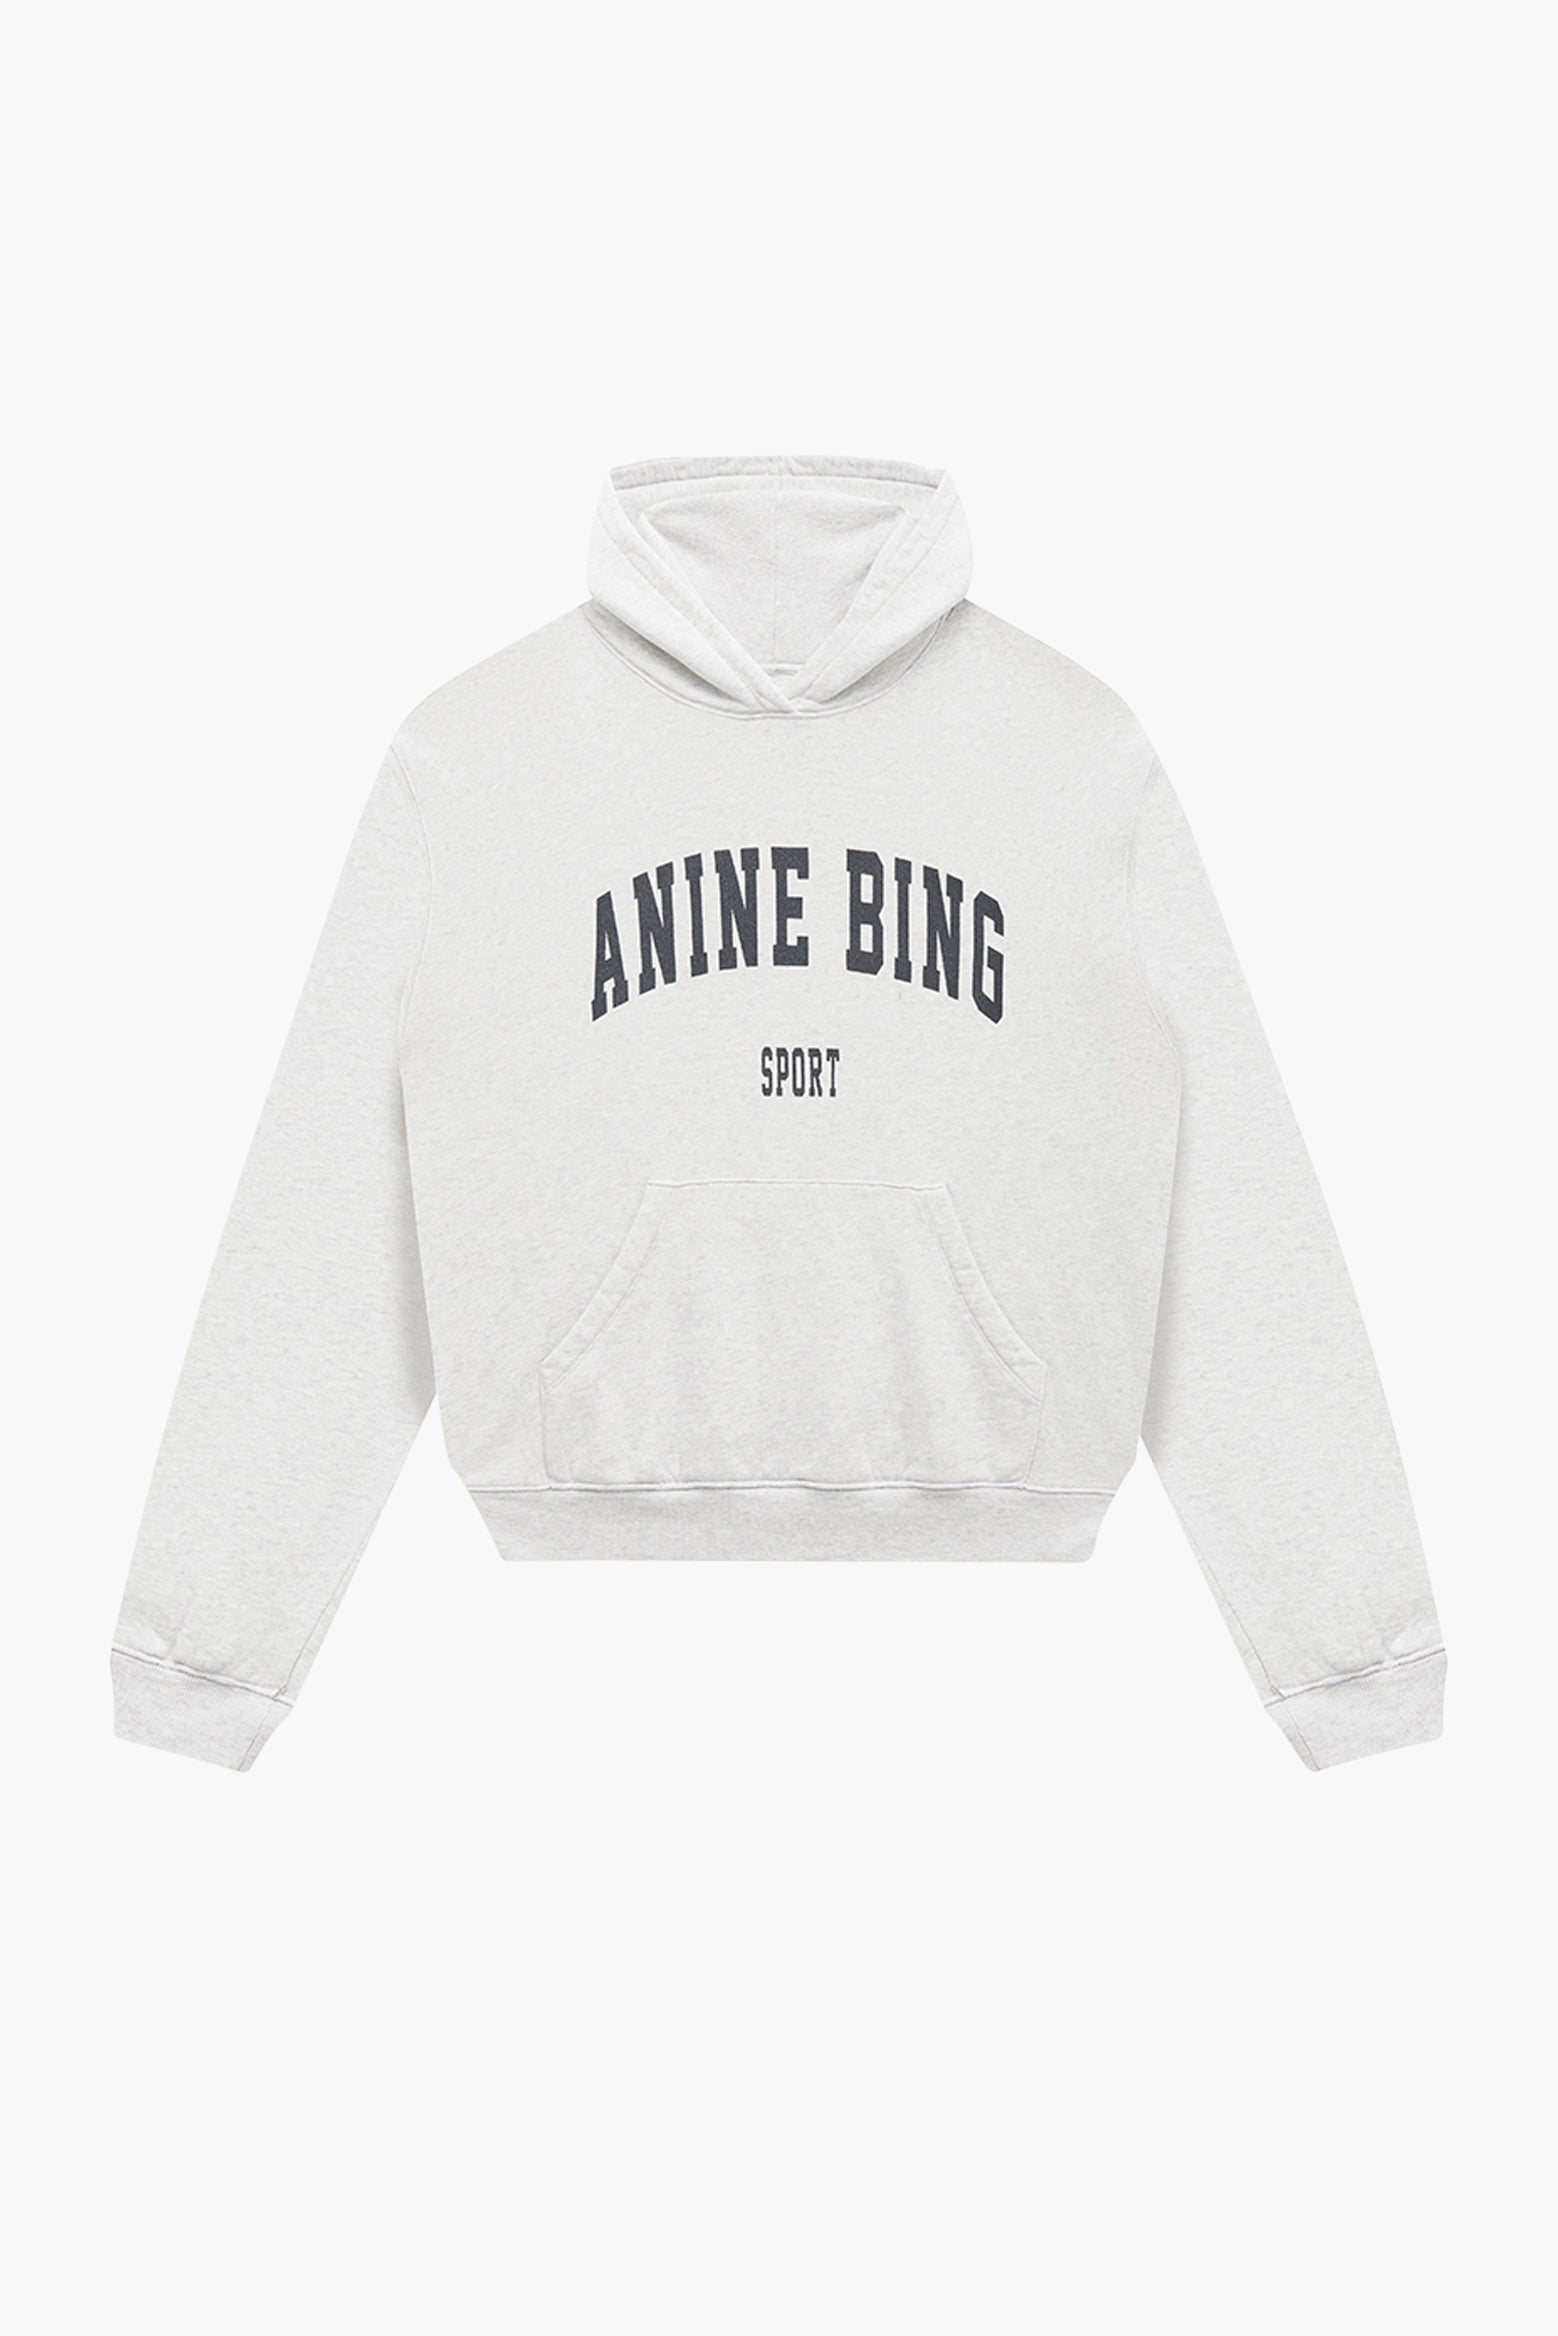 Anine Bing Harvey Sweatshirt in Grey Melange from The New Trend